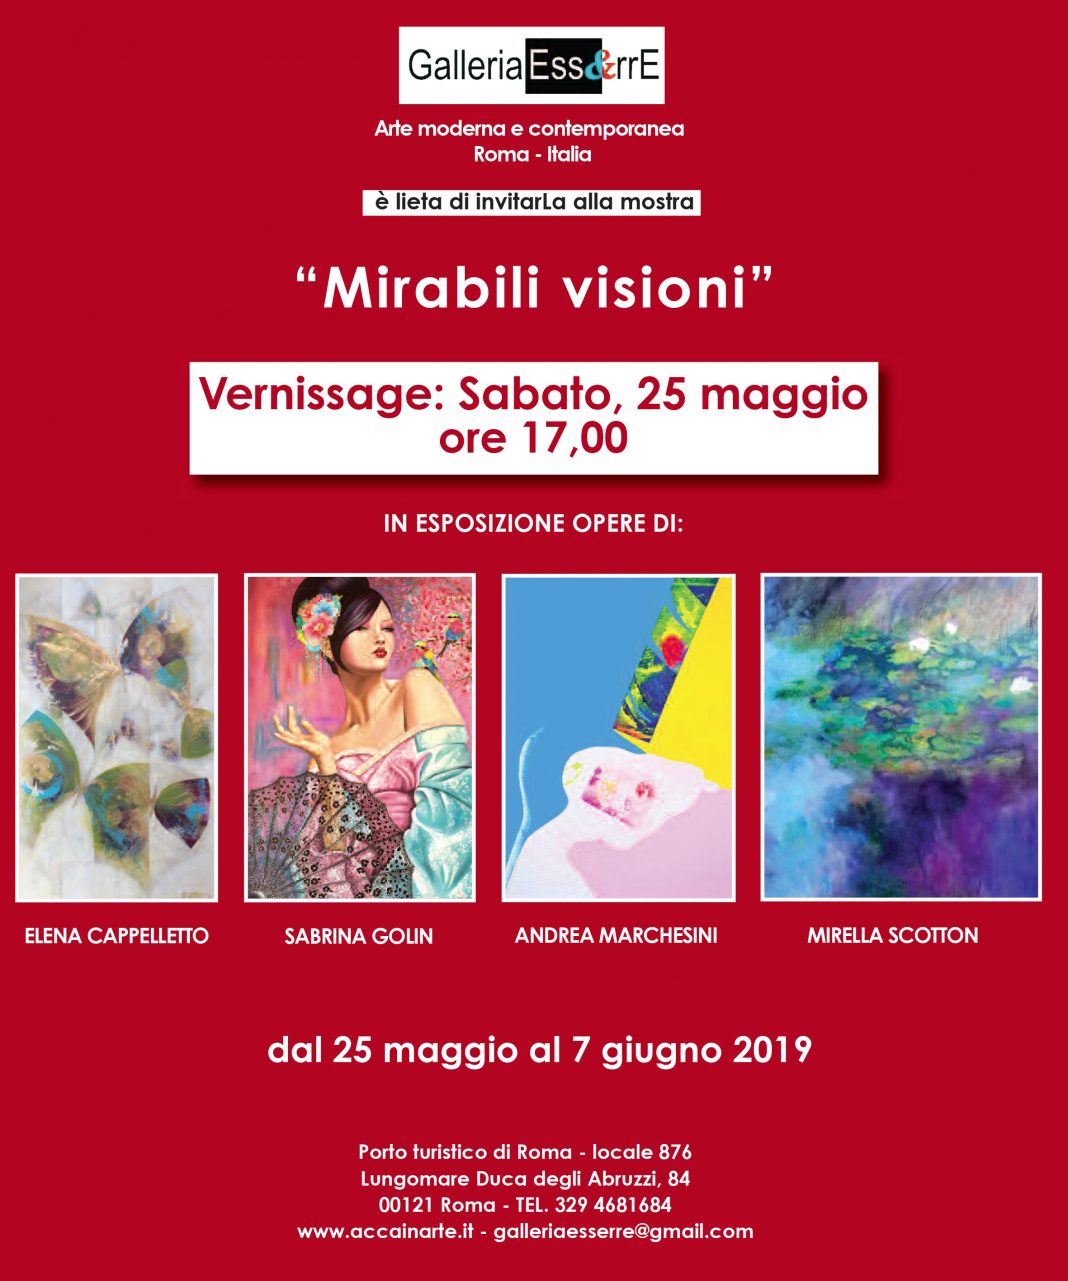 Mirabili visionihttps://www.exibart.com/repository/media/eventi/2019/05/mirabili-visioni-1068x1281.jpg